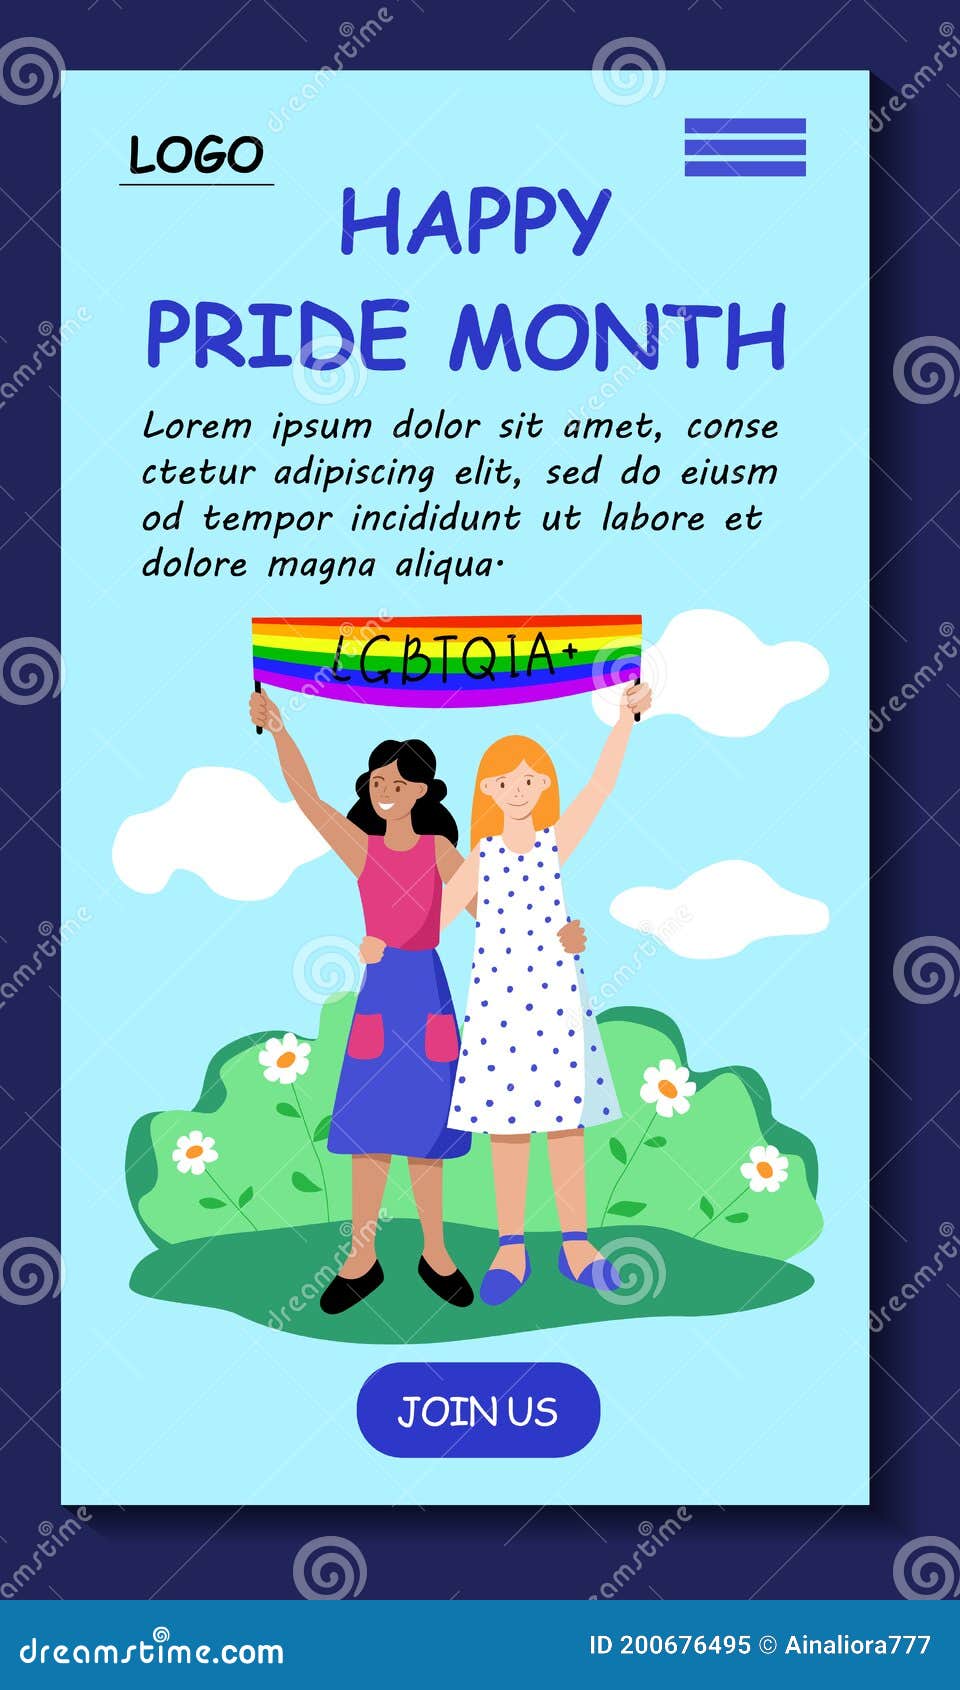 Happy Pride Month. LGBT Mobile App Template. Lesbian